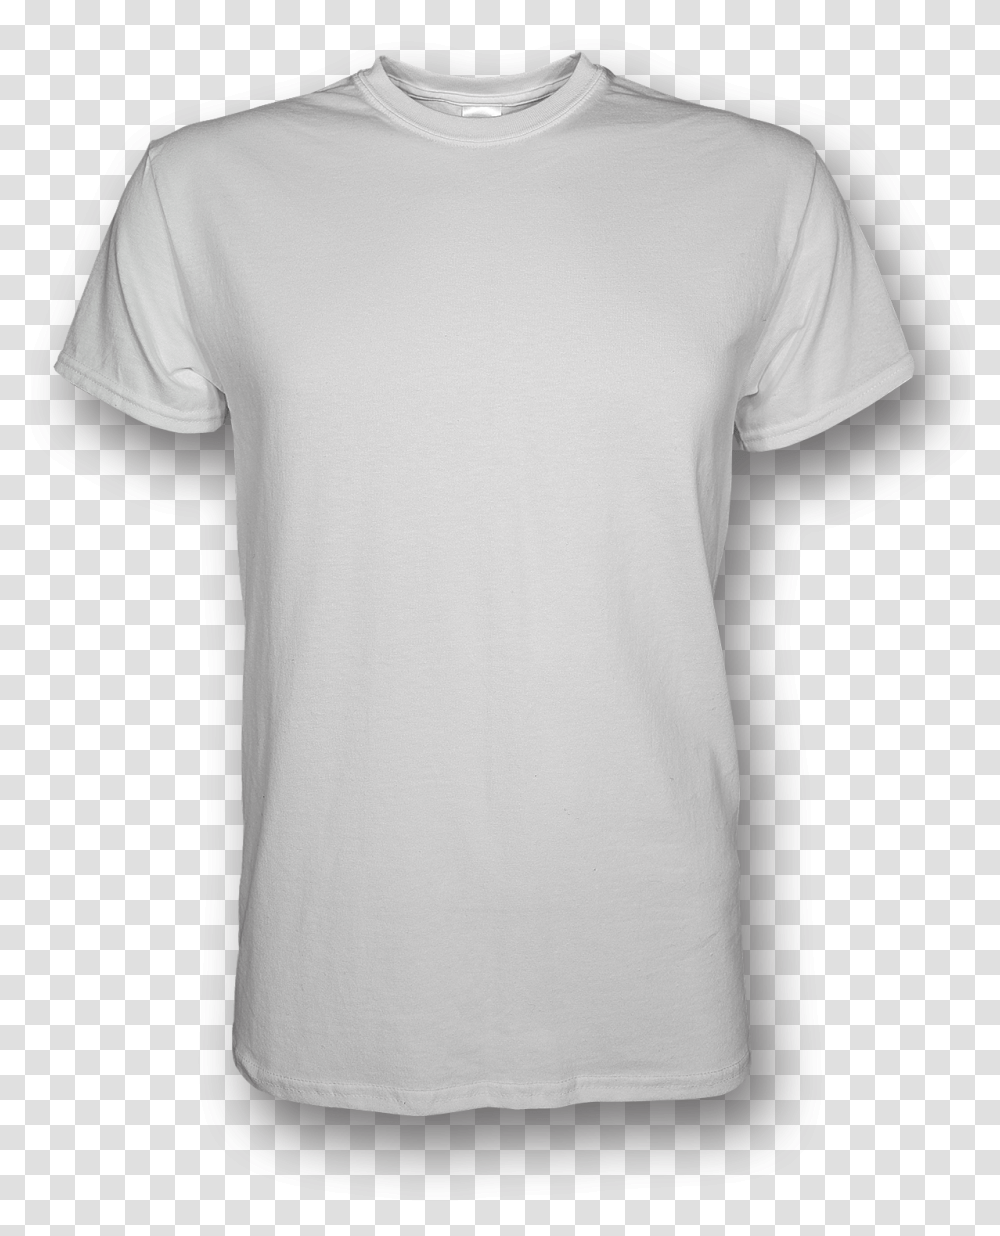 Blank White T Shirt Blank Shirt, Clothing, Apparel Transparent Png